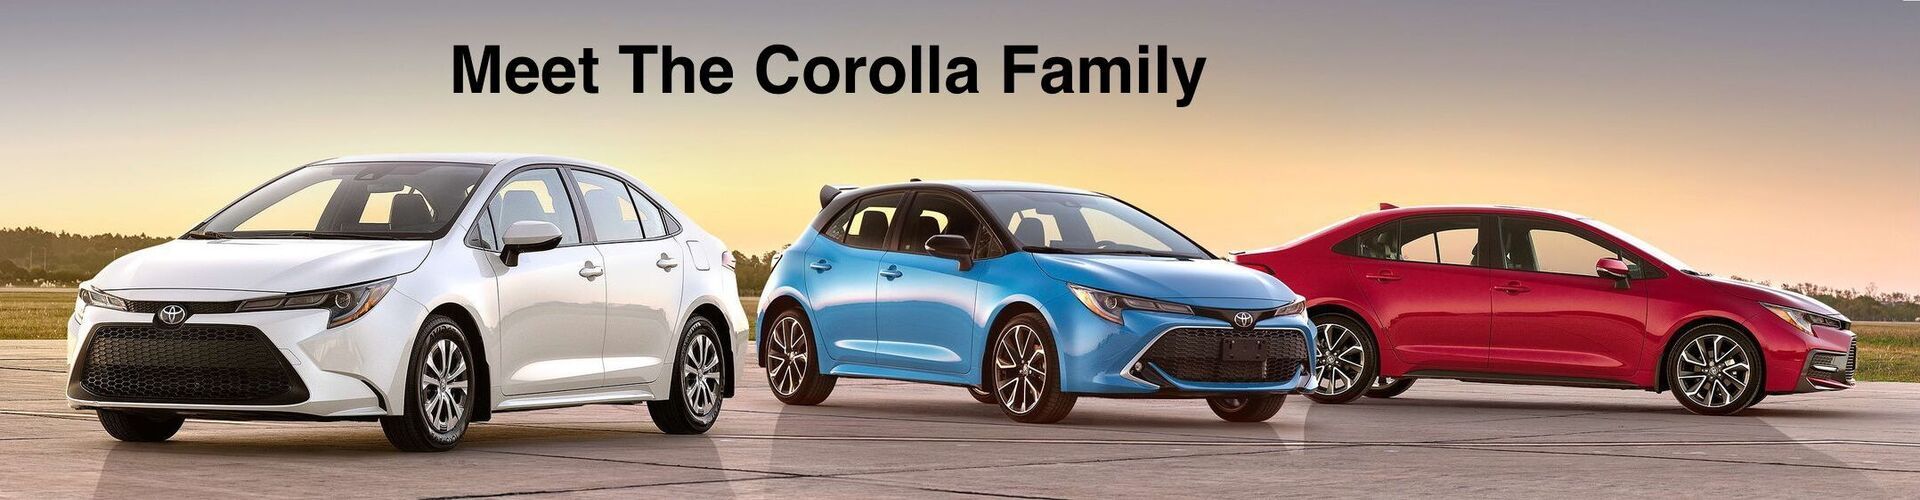 Meet The Corolla Family